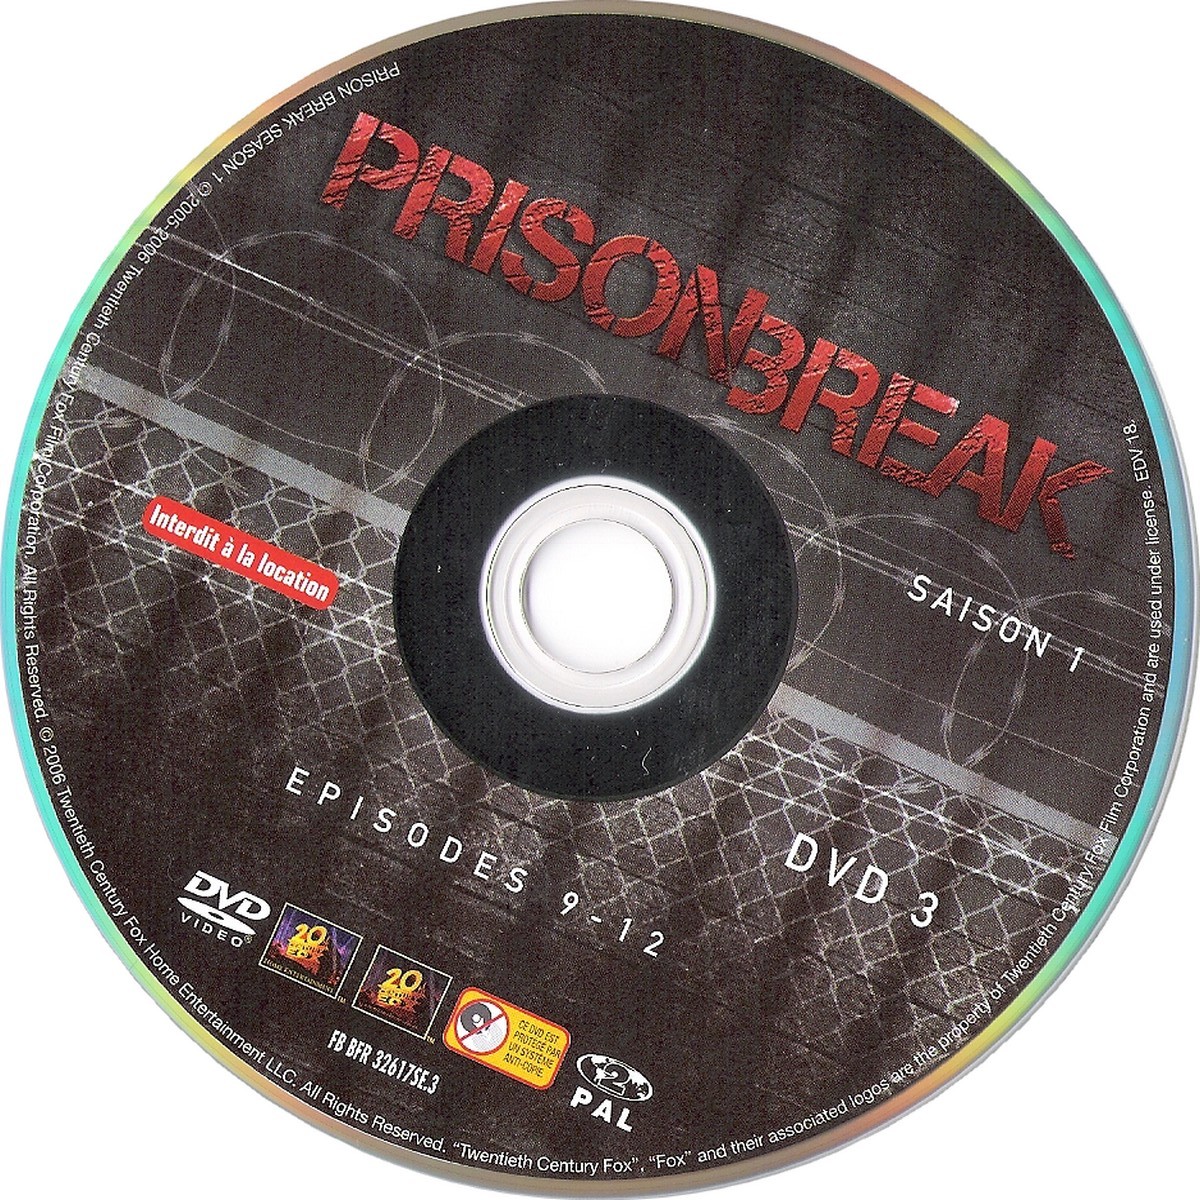 Prison break saison 1 dvd 3 v2